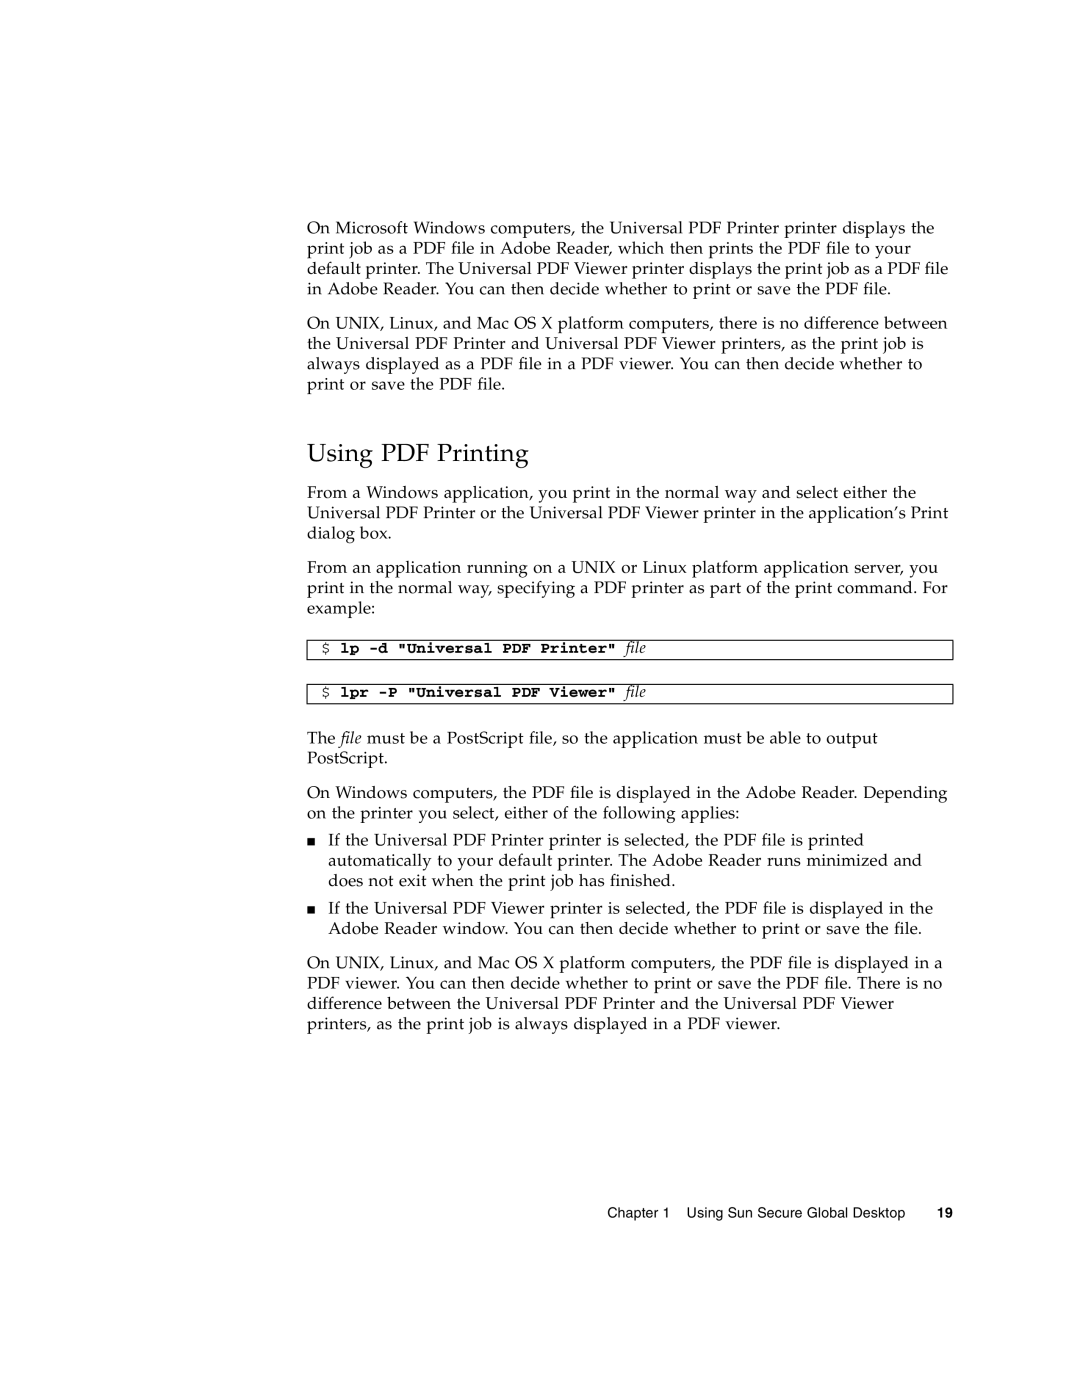 Sun Microsystems 4.5 manual Using PDF Printing, $ lp -d Universal PDF Printer file $ lpr -P Universal PDF Viewer file 